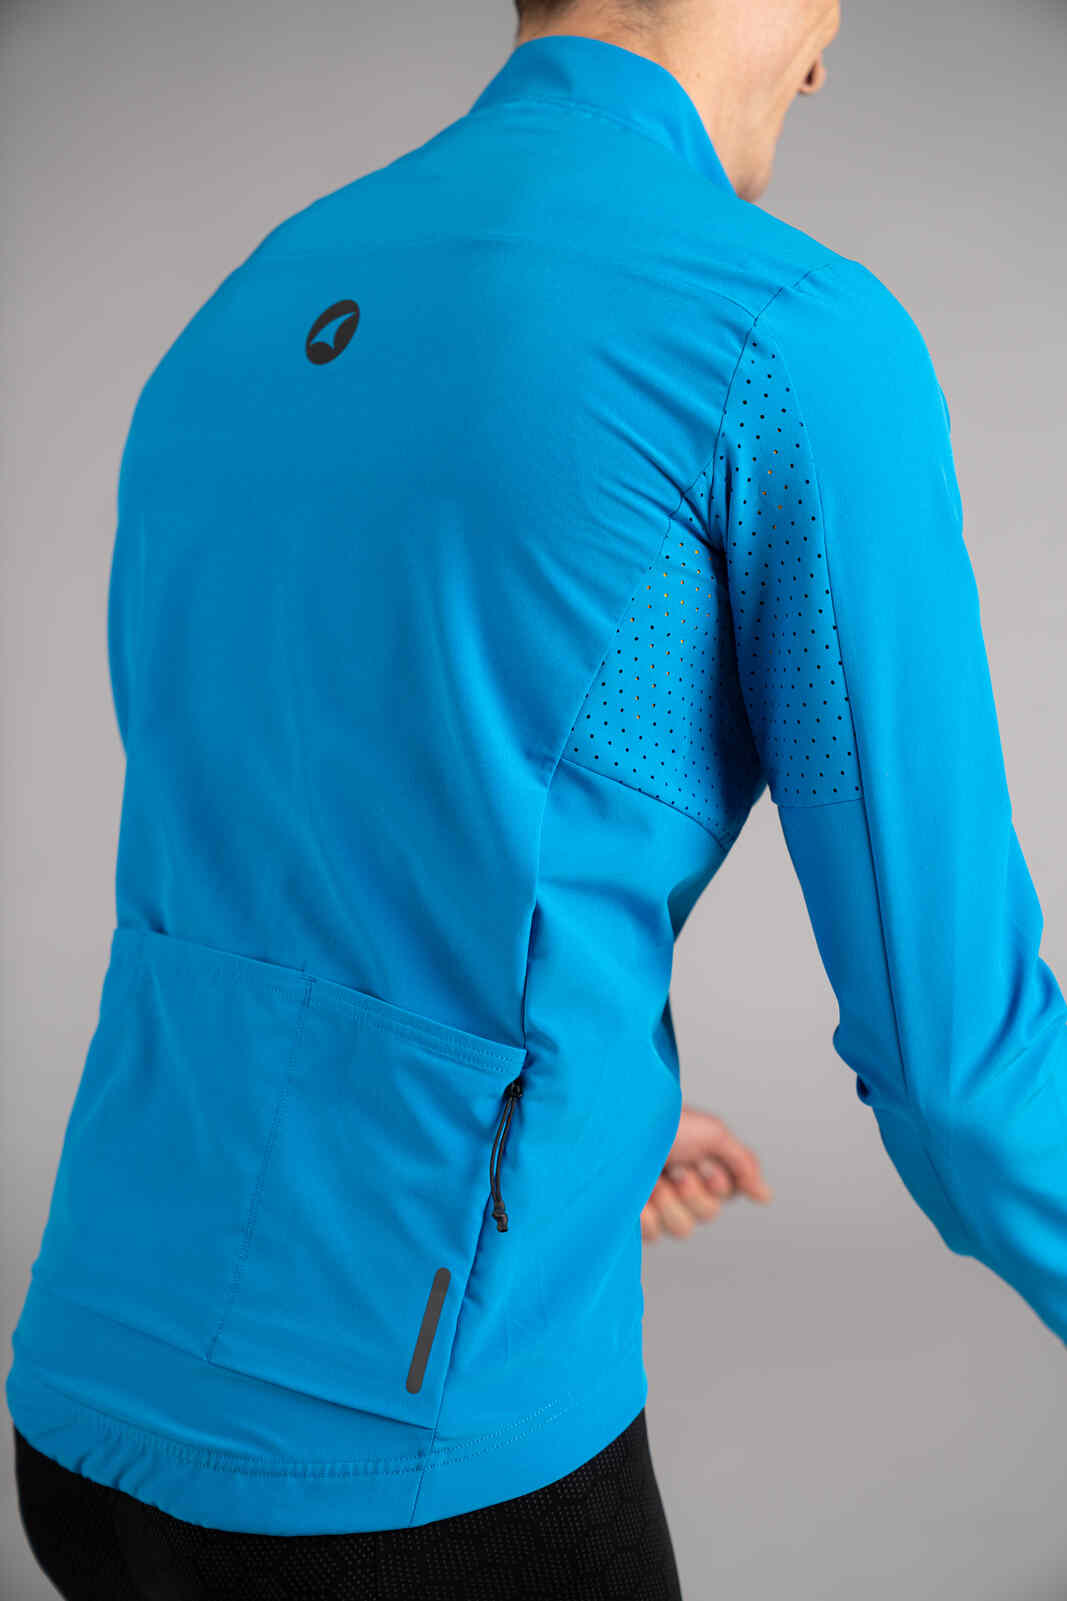 Men's Lightweight Blue Summit Shell Cycling Jacket - Underarm Ventilation